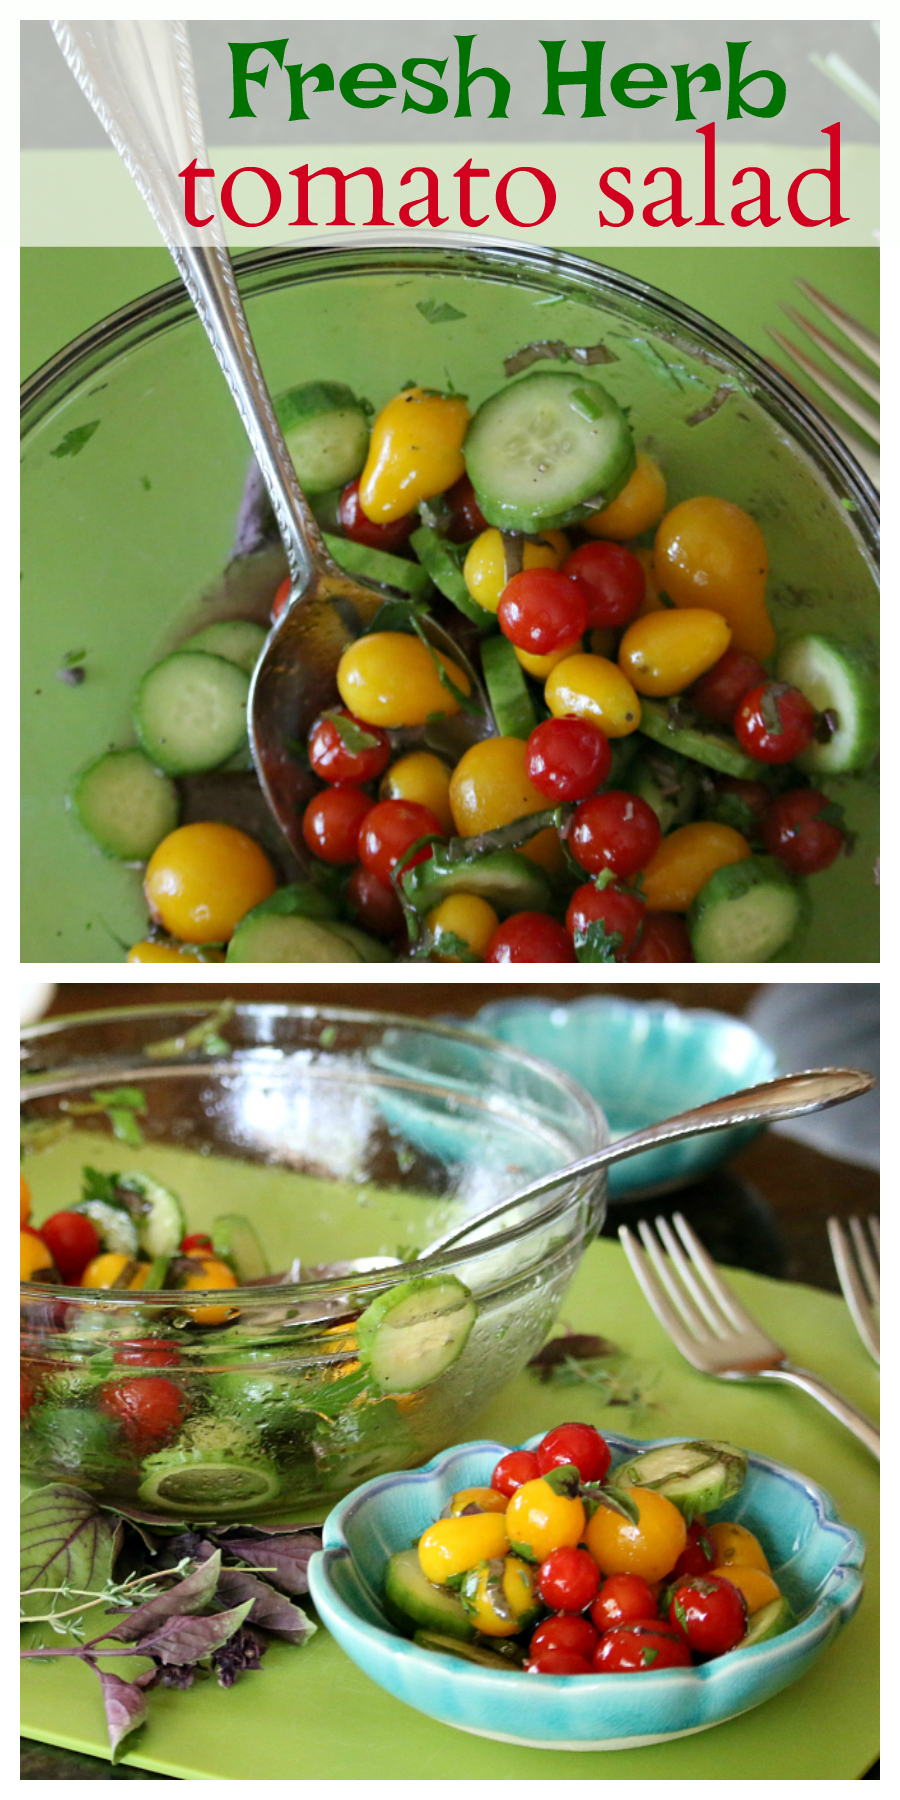 Fresh Herb Tomato Salad Recipe CeceliasGoodStuff.com Good Food for Good People